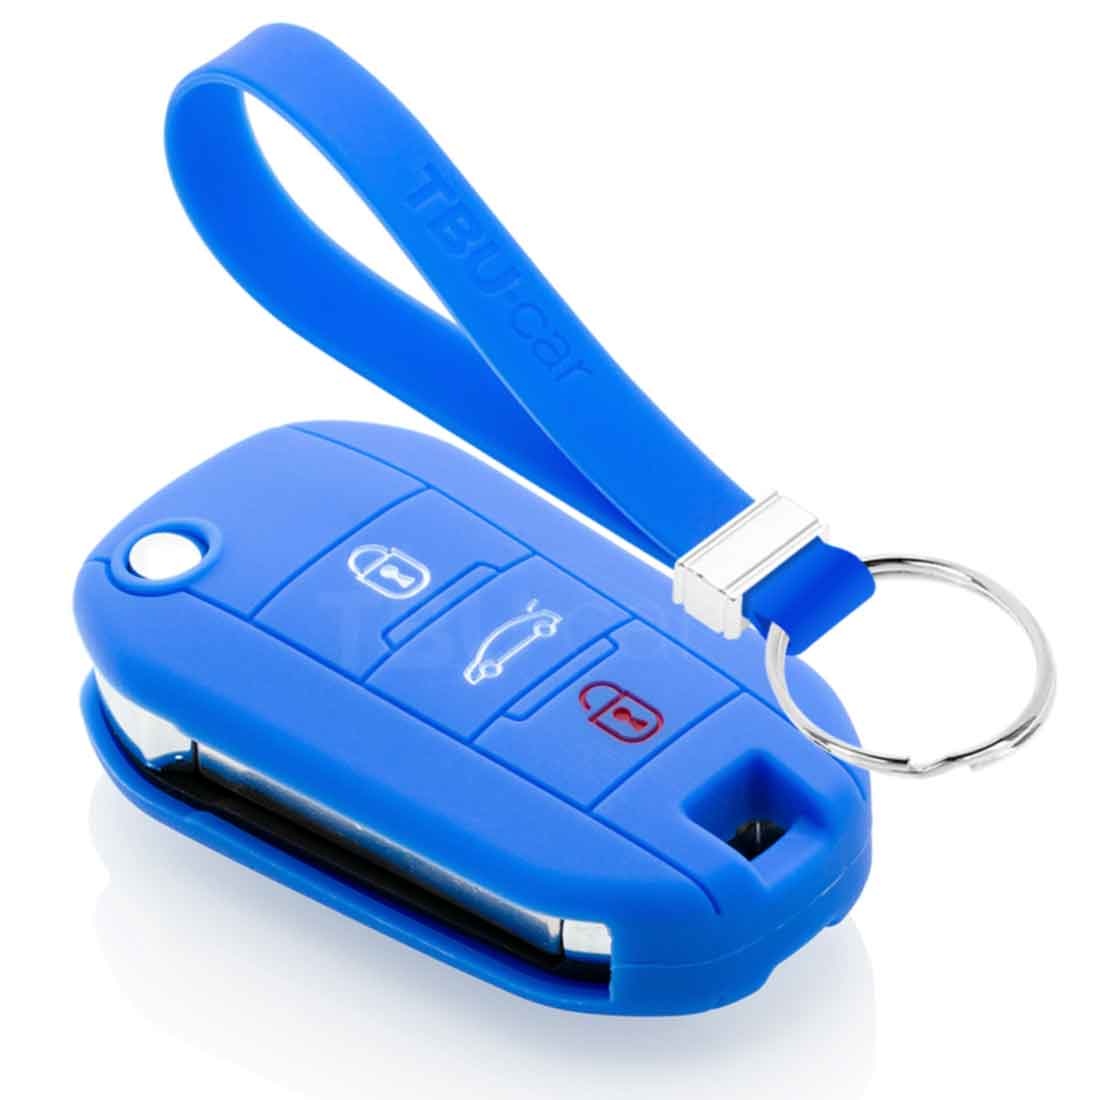 TBU car TBU car Autoschlüssel Hülle kompatibel mit Citroën 3 Tasten - Schutzhülle aus Silikon - Auto Schlüsselhülle Cover in Blau